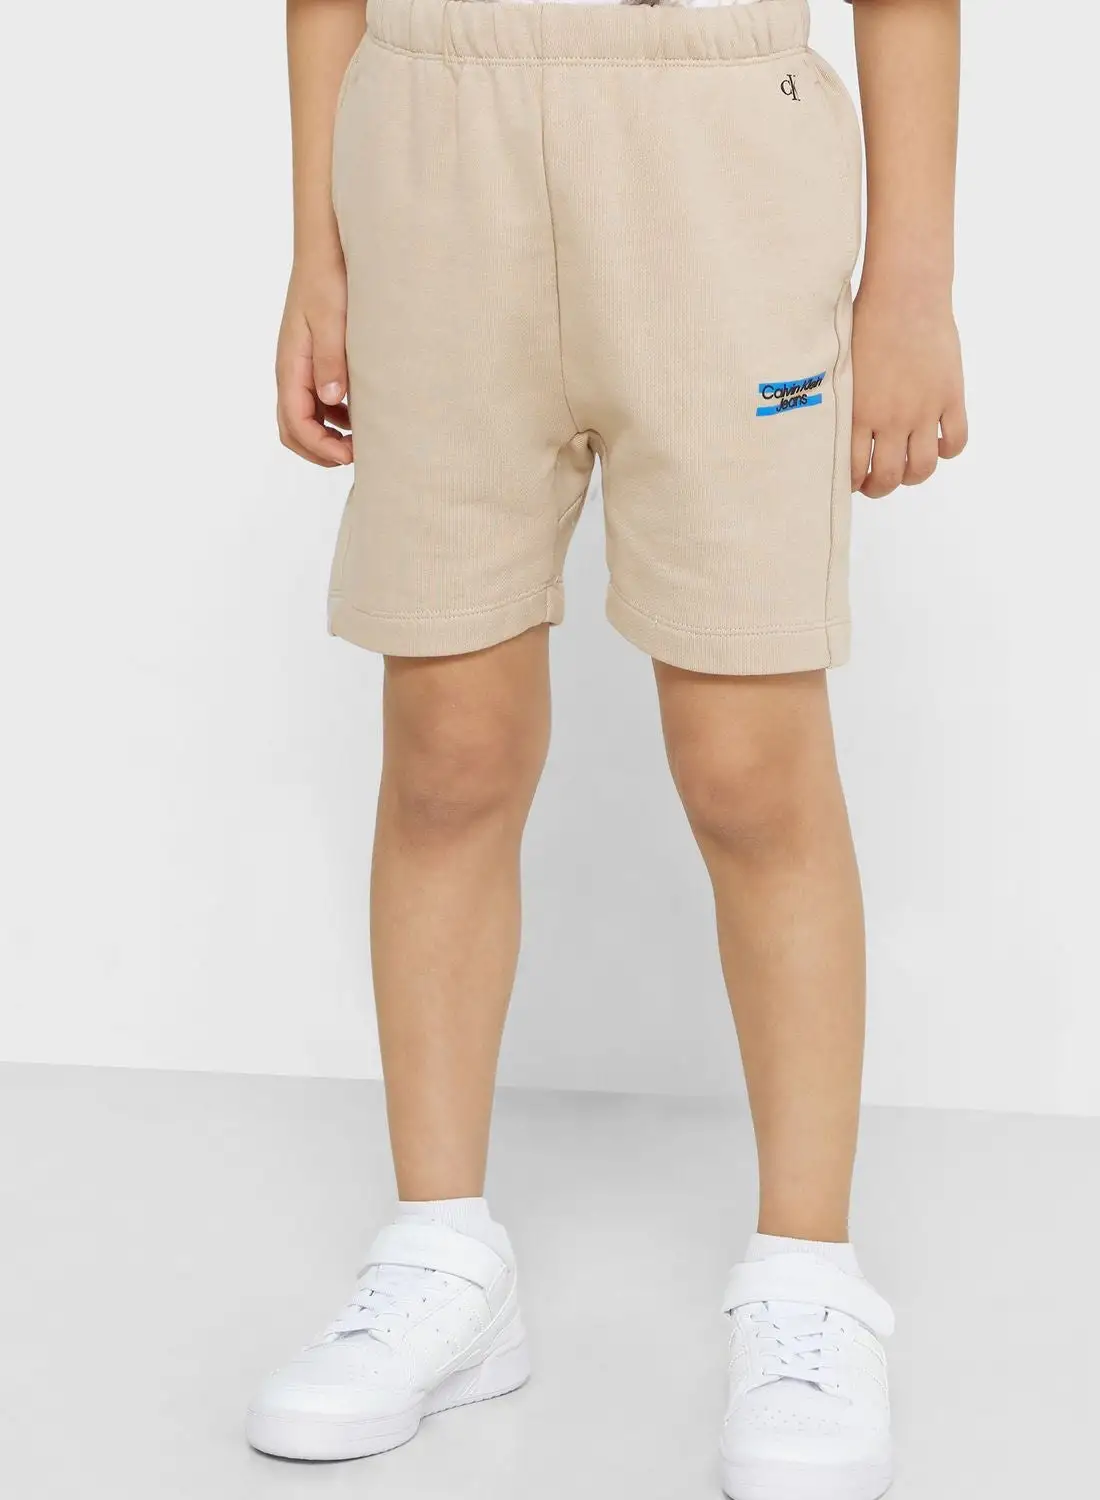 Calvin Klein Jeans Kids Logo Shorts